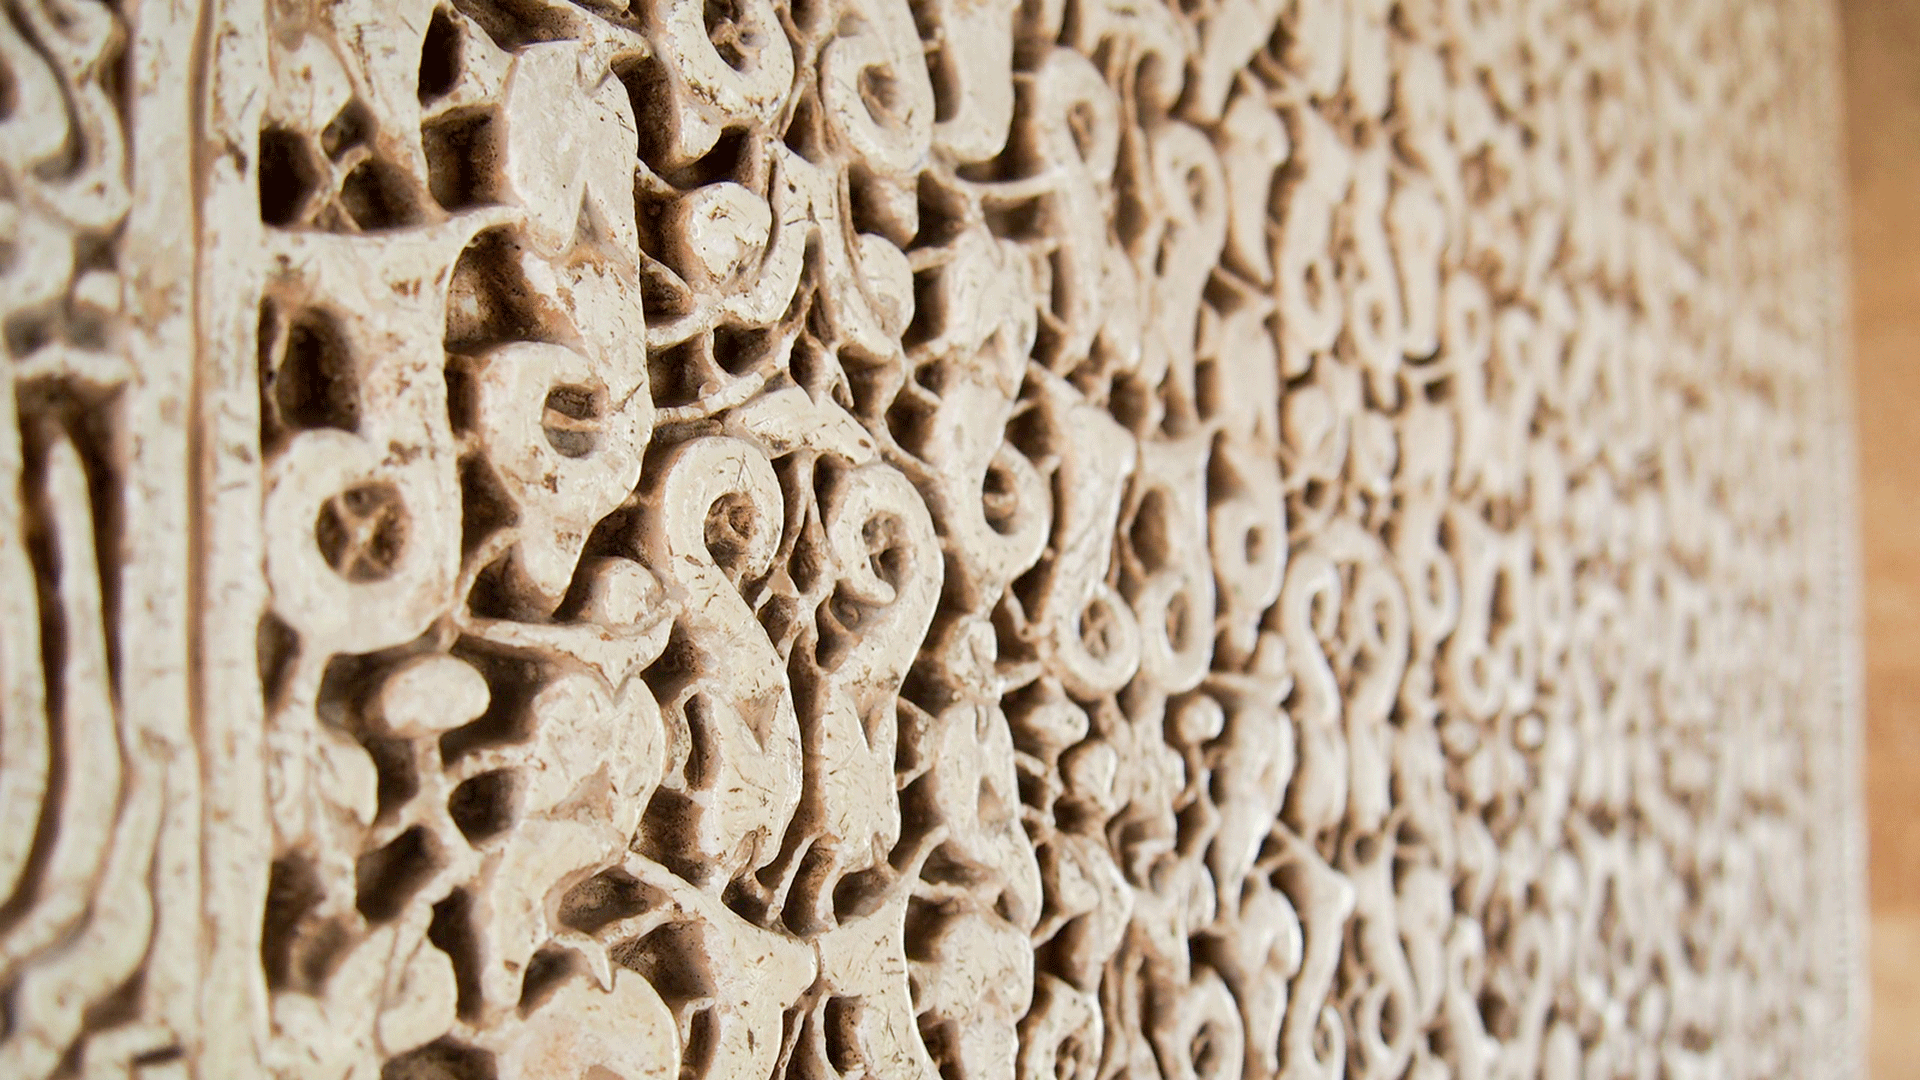 architecture pattern